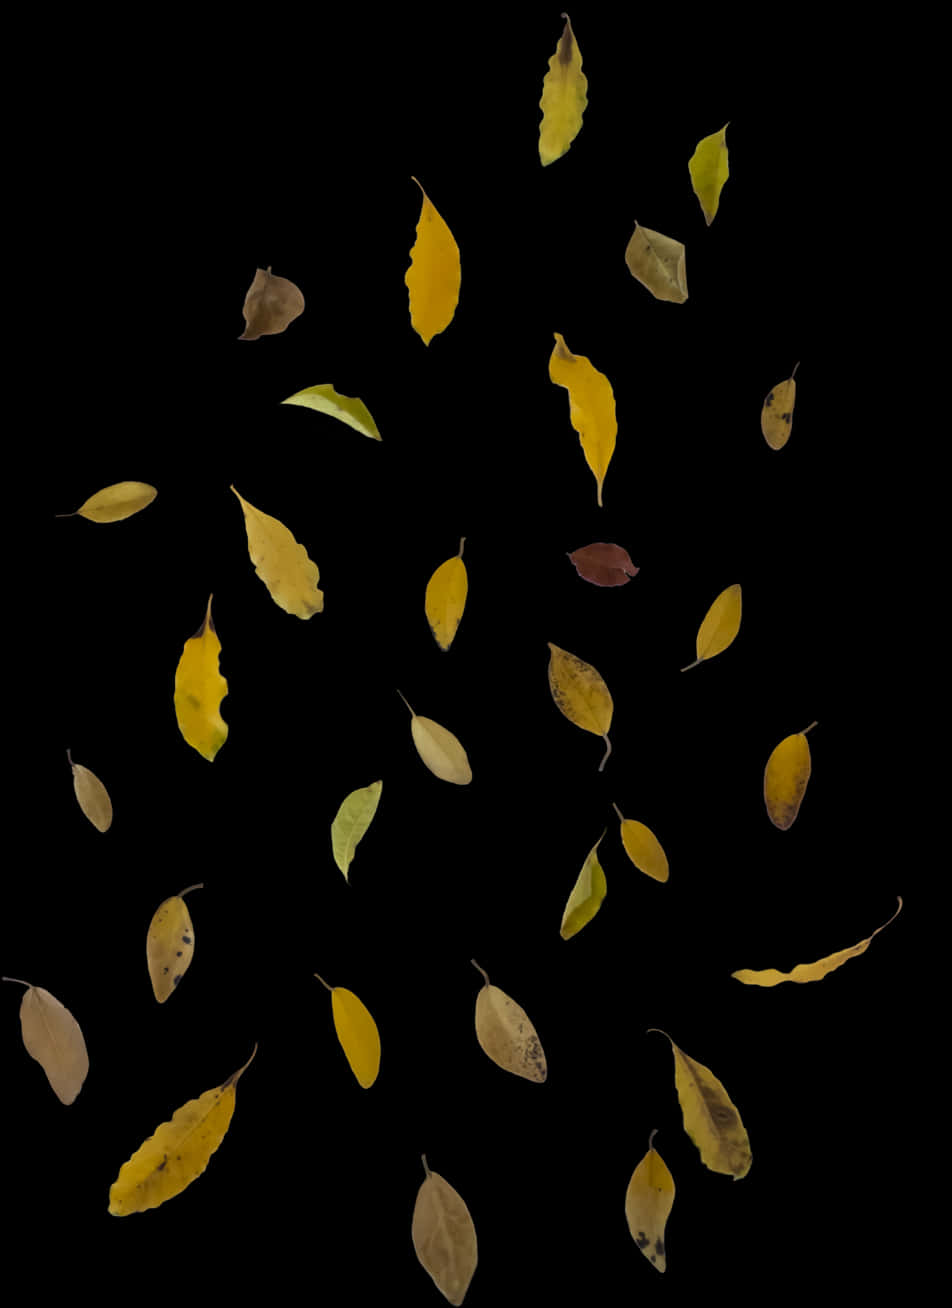 Autumn Leaves Falling Against Dark Background.jpg PNG image